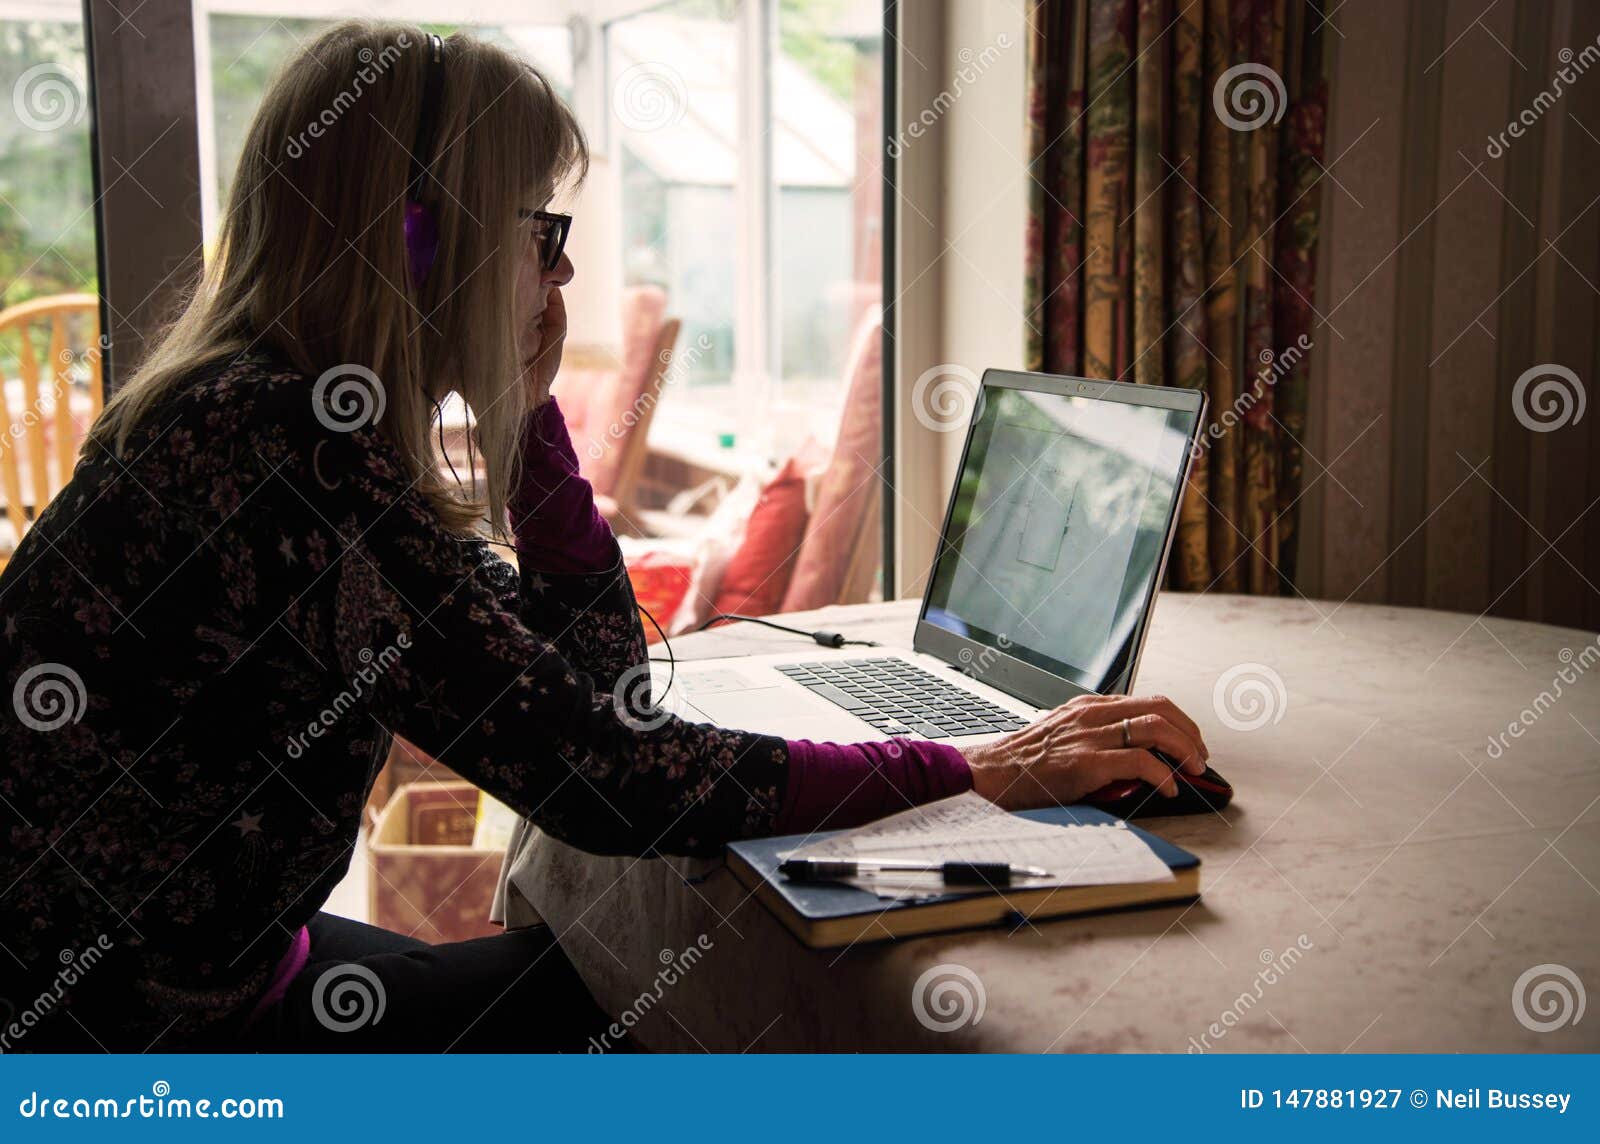 self employed woman listening to webinar on her laptop,wearing headphones